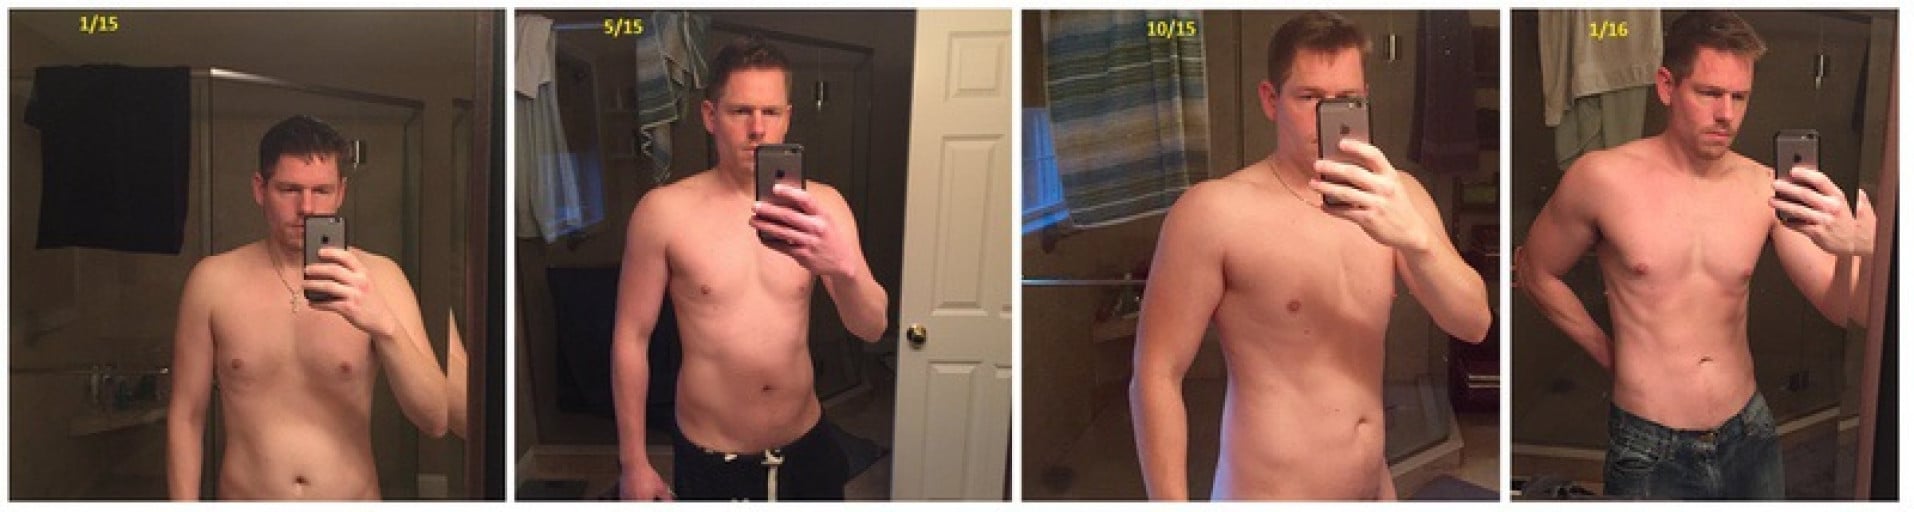 My 1 Year Weight Loss Journey: M/34/6' [182 >164 = 18Lbs] Progress